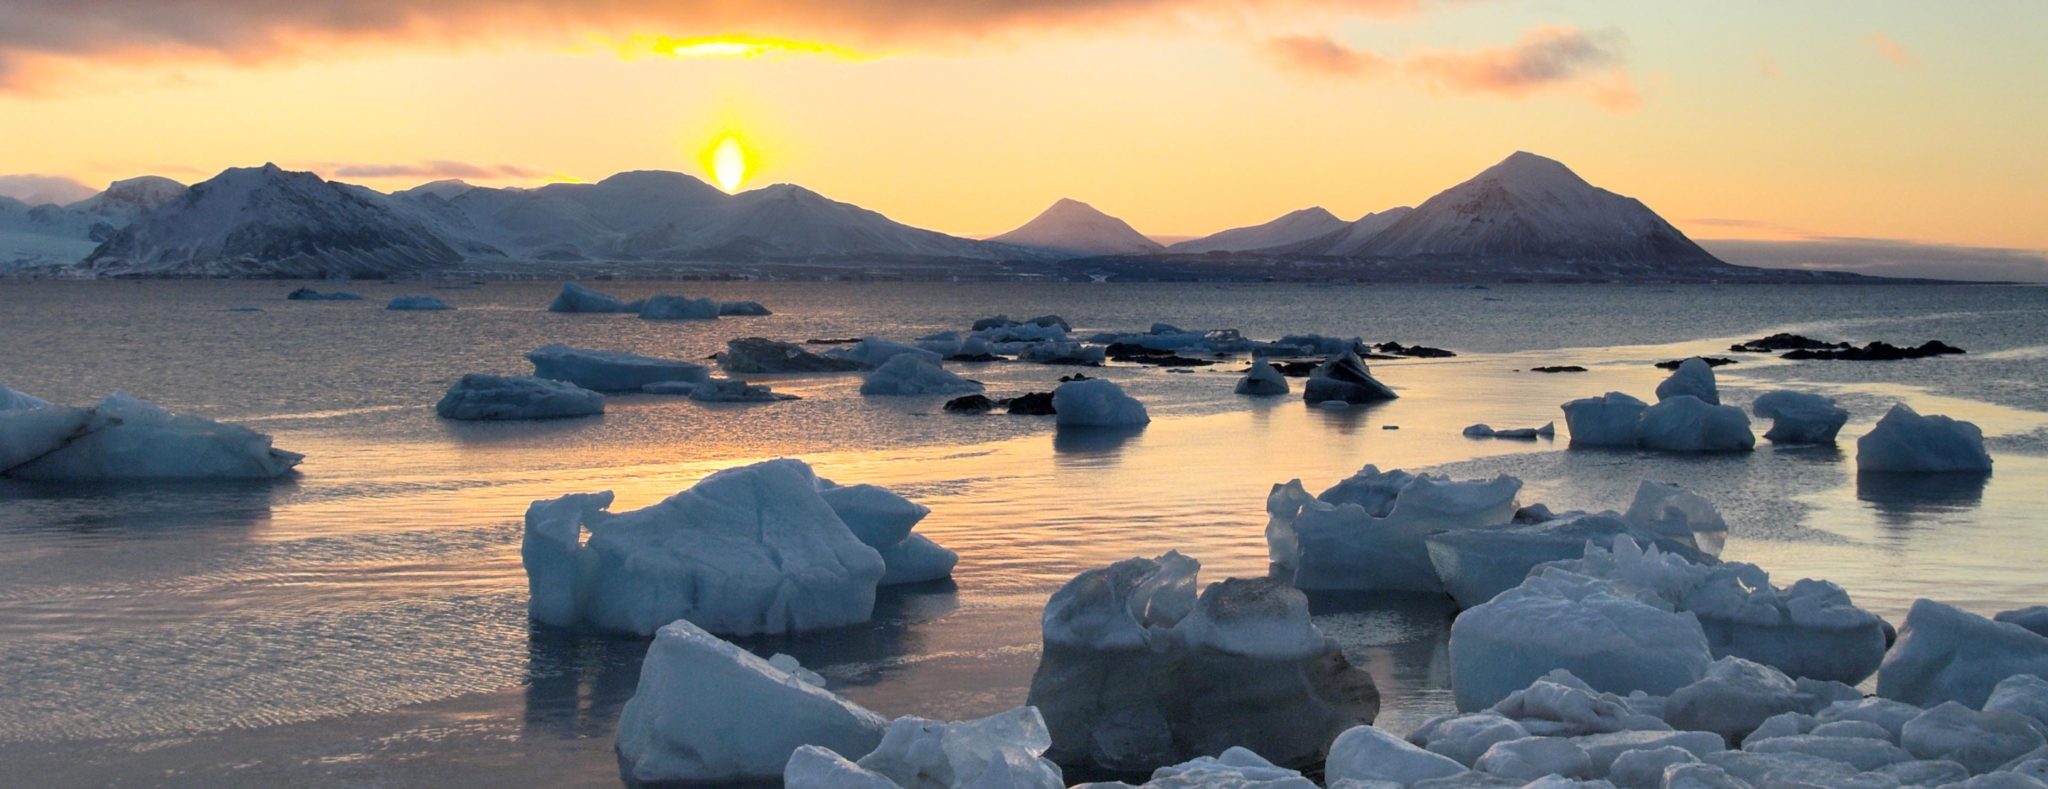 Spitsbergen ijsbergen in de zon